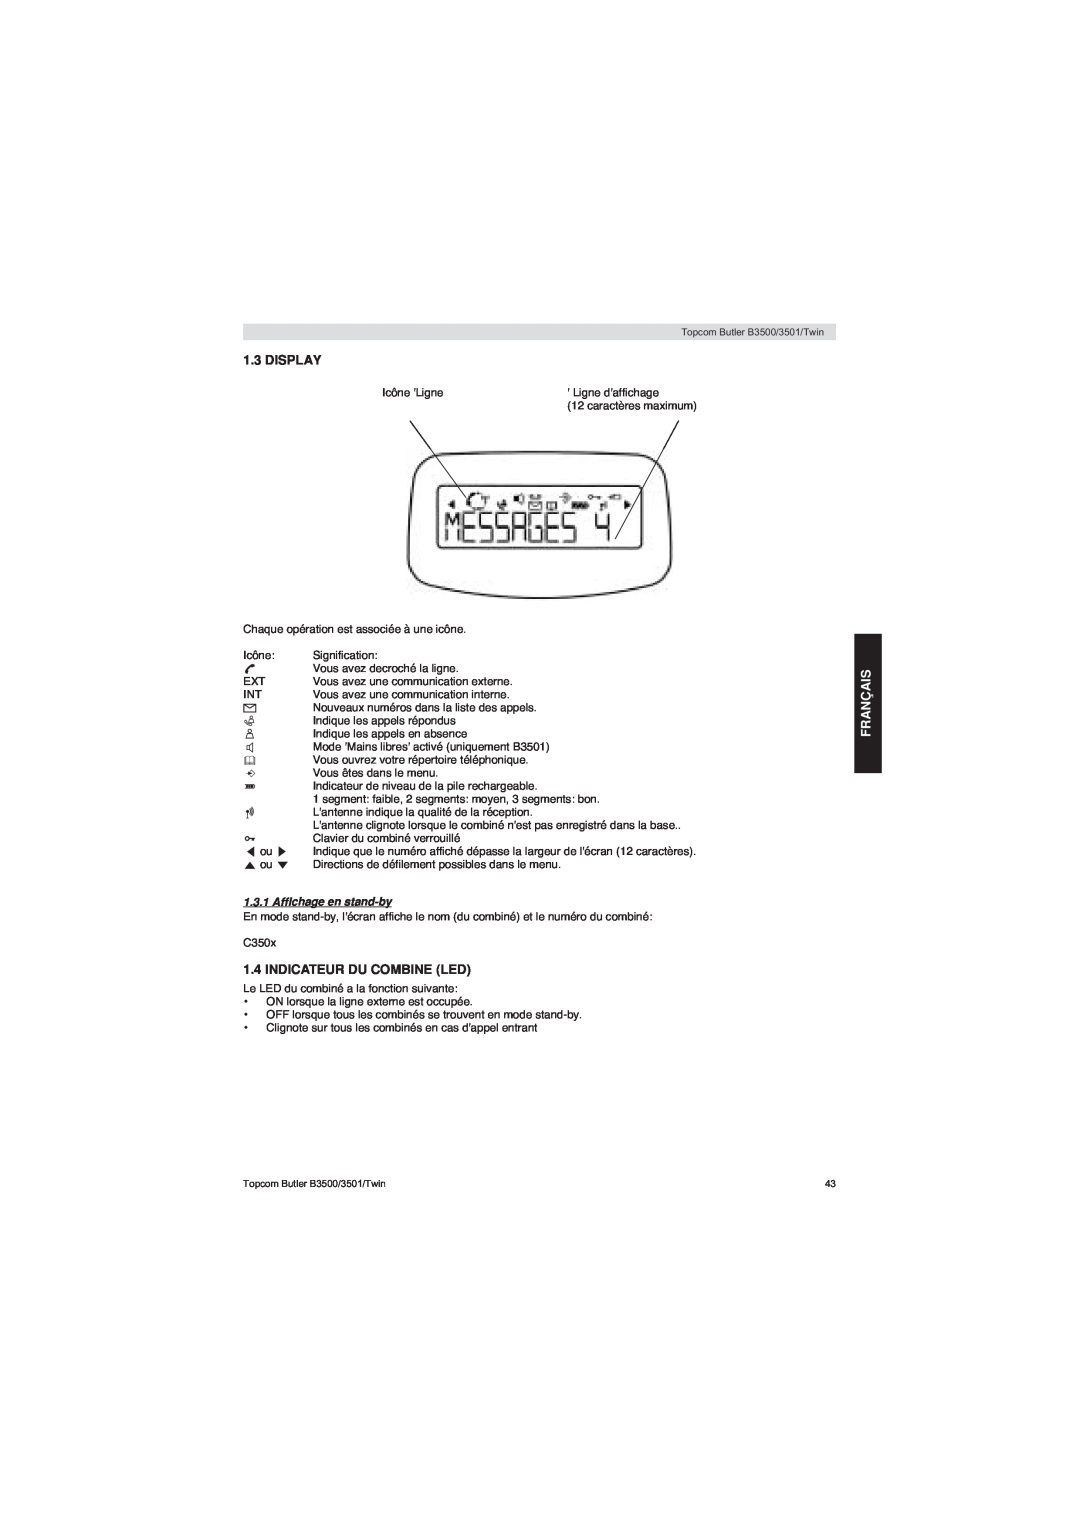 Topcom BUTLER 3500 manual Indicateur Du Combine Led, Display, Français, 1.3.1 Afﬁchage en stand-by 